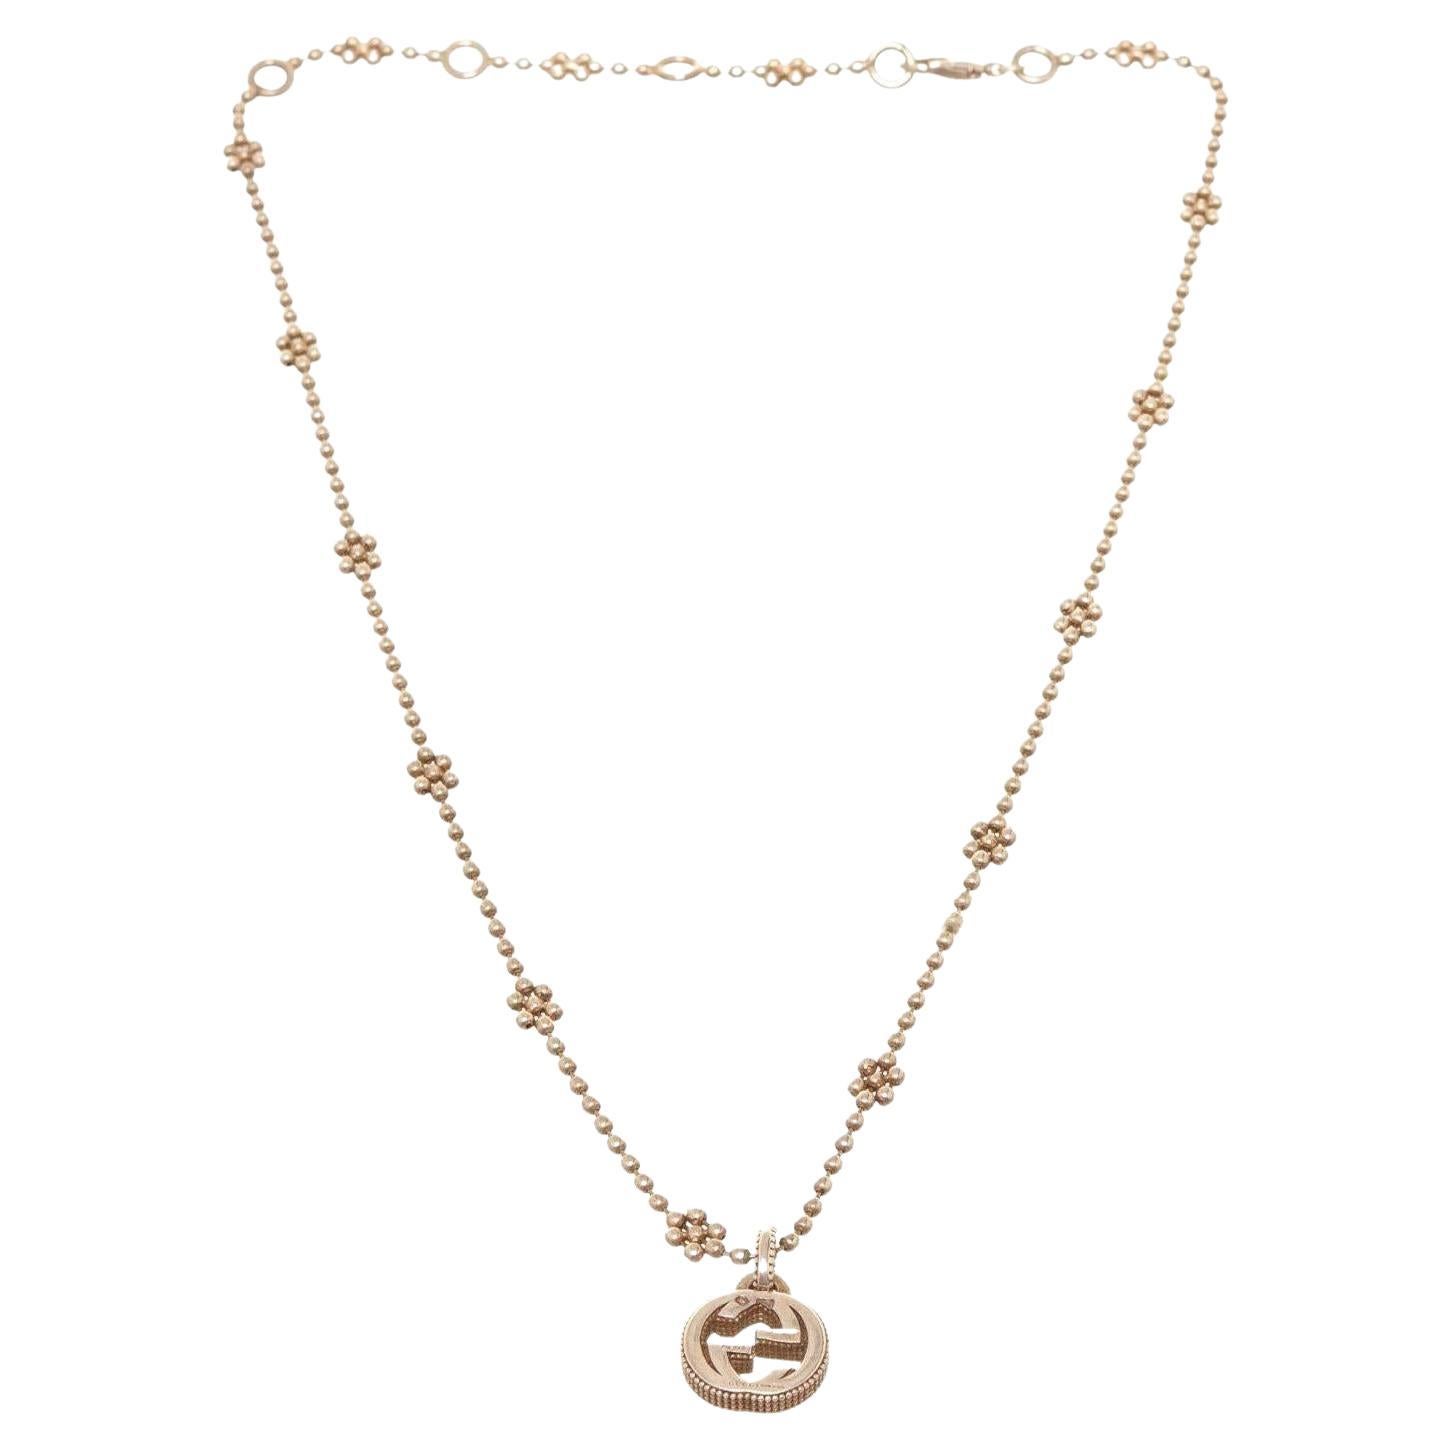 Gucci Silver Interlocking G Necklace with Silver-Tone Hardware